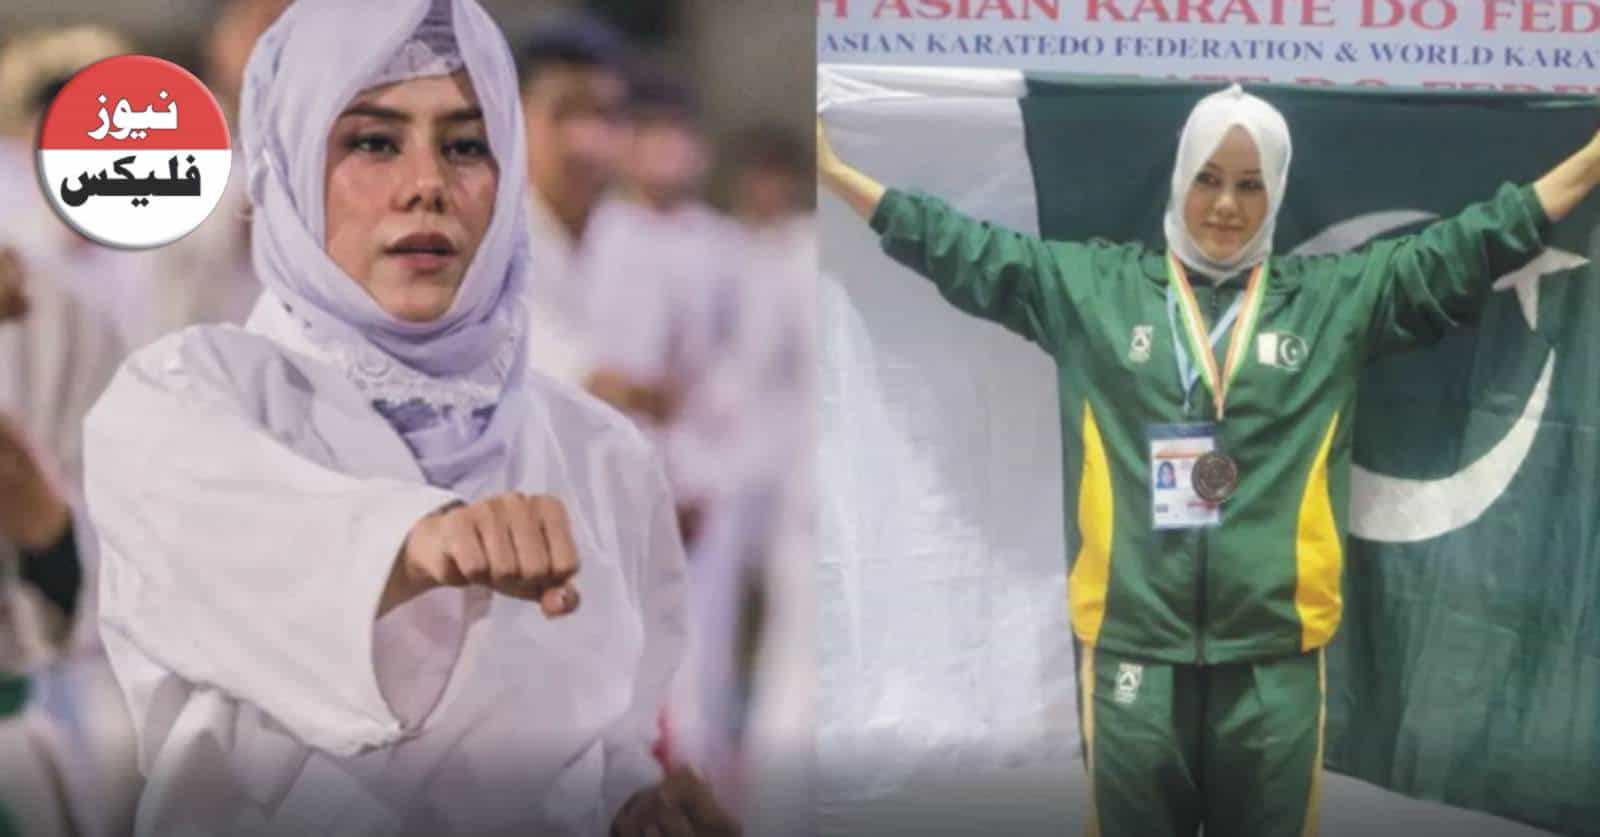 Meet Kulsoom Hazara – Pakistan’s Female Karate Star Who Received ‘Icon Of The Nation’ Award